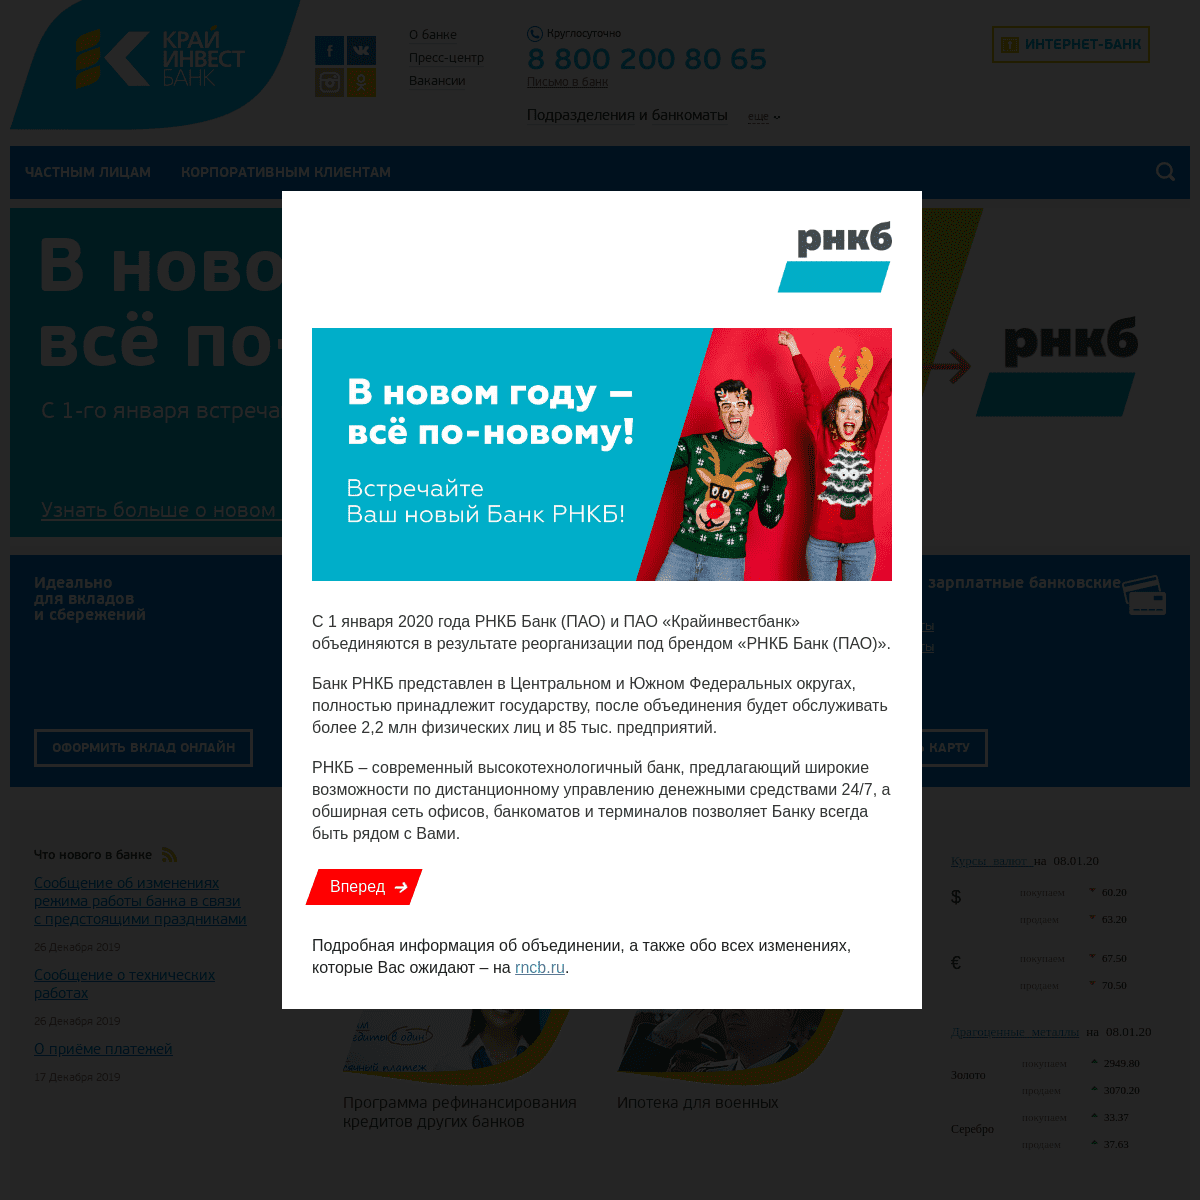 A complete backup of kibank.ru